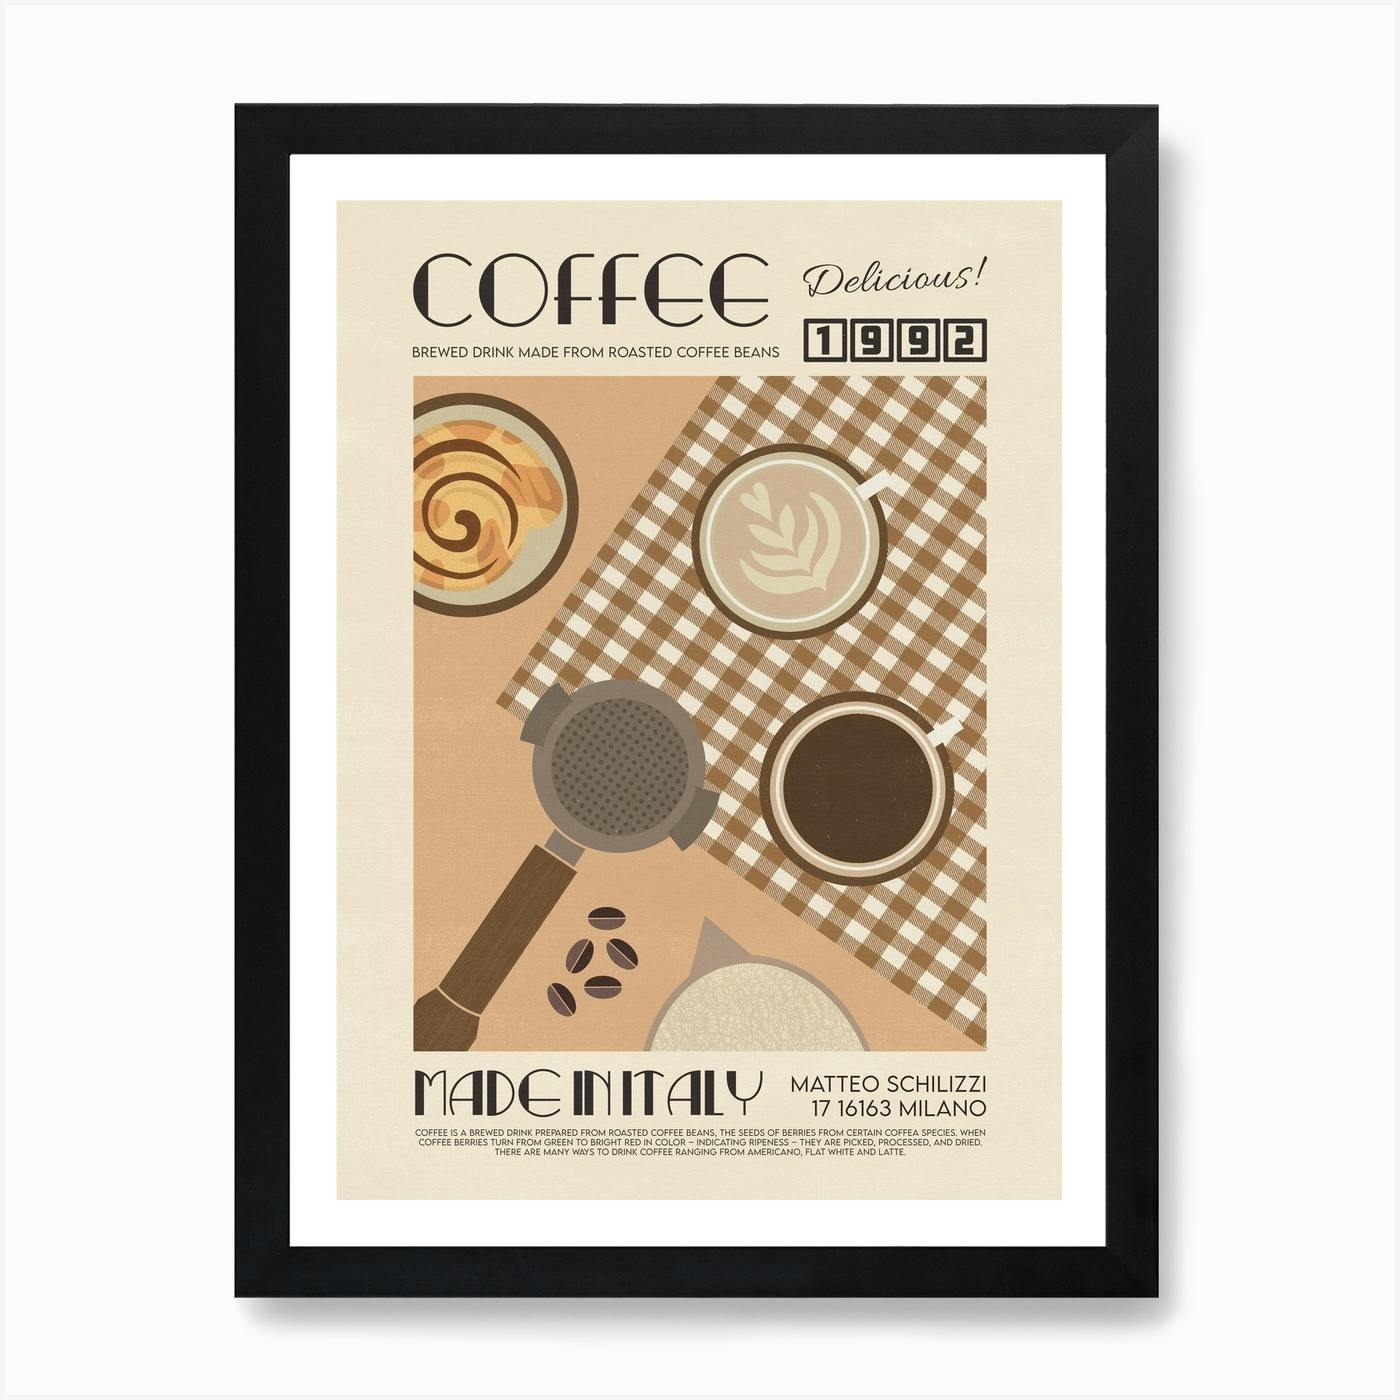 Coffee Wall art Coffee INSTANT DOWNLOAD Know your Coffee Print Coffee Print Home Decor Digital Coffee Art Coffee Art